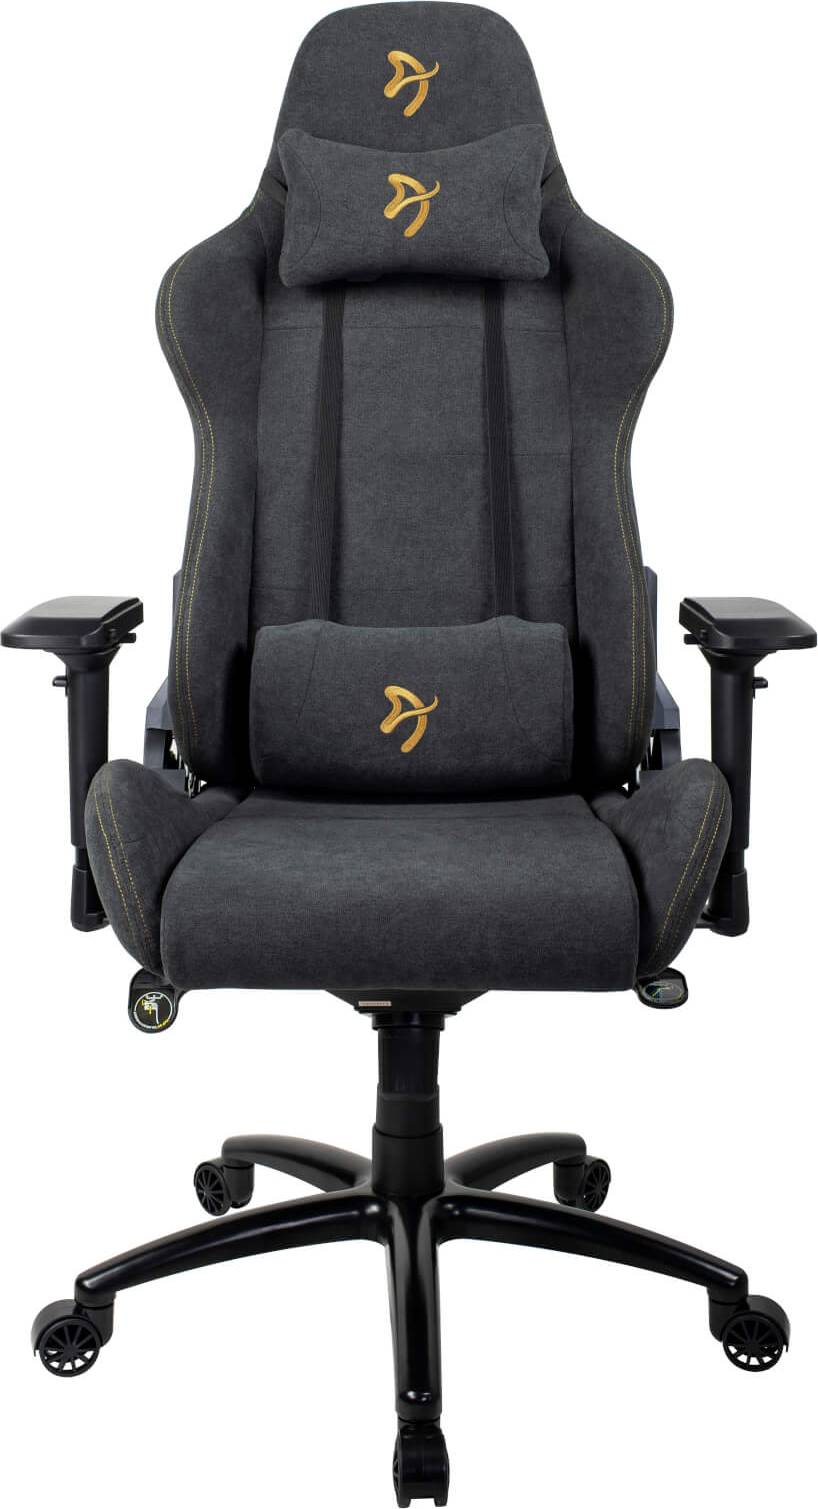  Bild på Arozzi Verona Signature Soft Fabric Gaming Chair - Black/Gold gamingstol